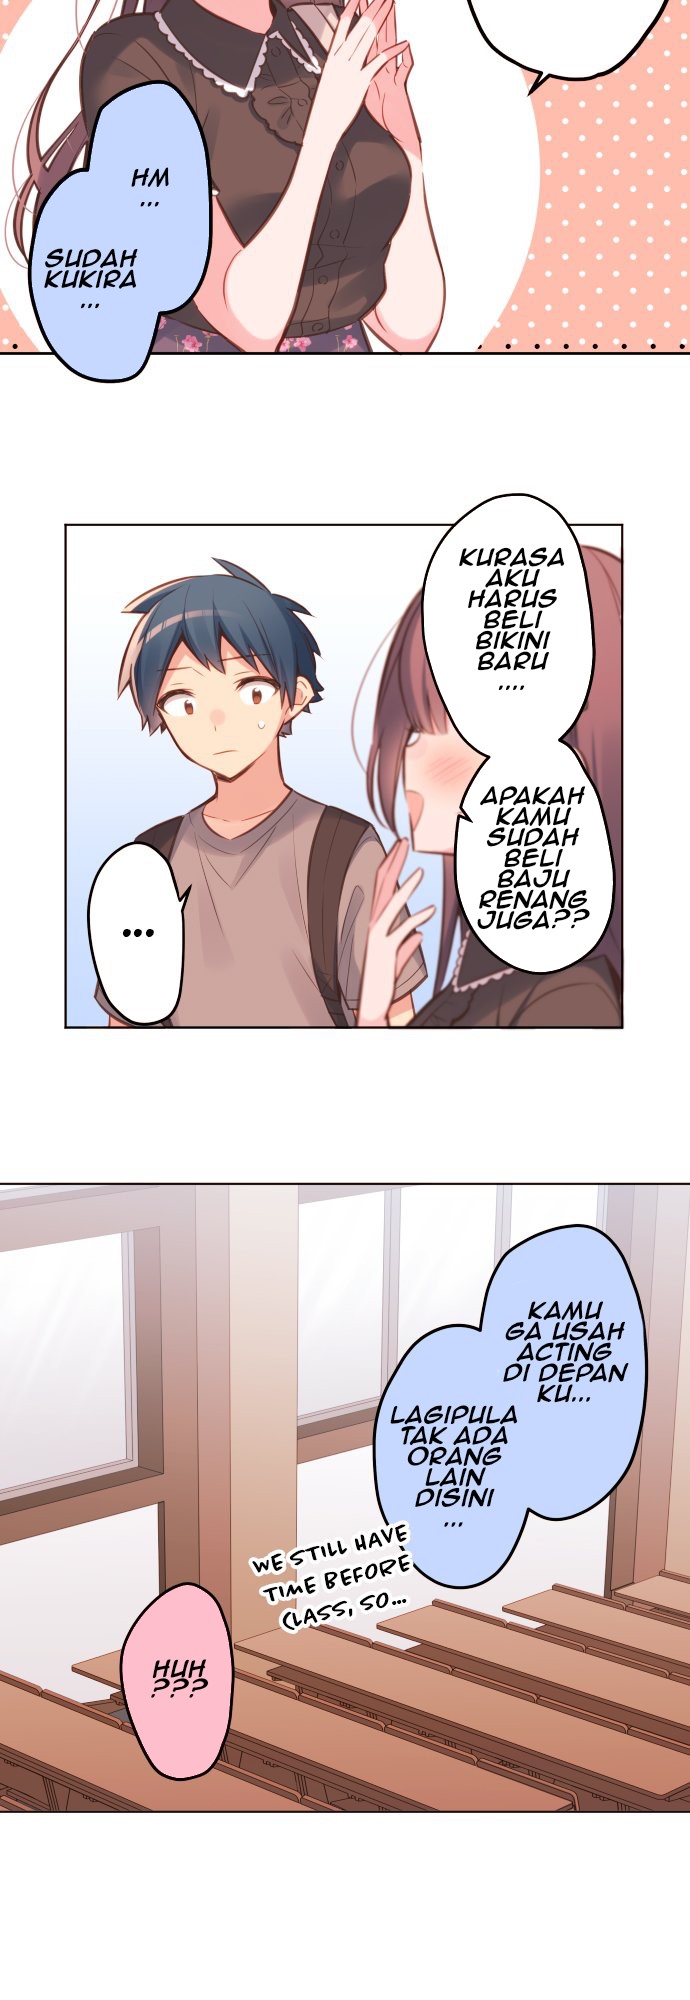 Waka-chan Is Flirty Again Chapter 31 15